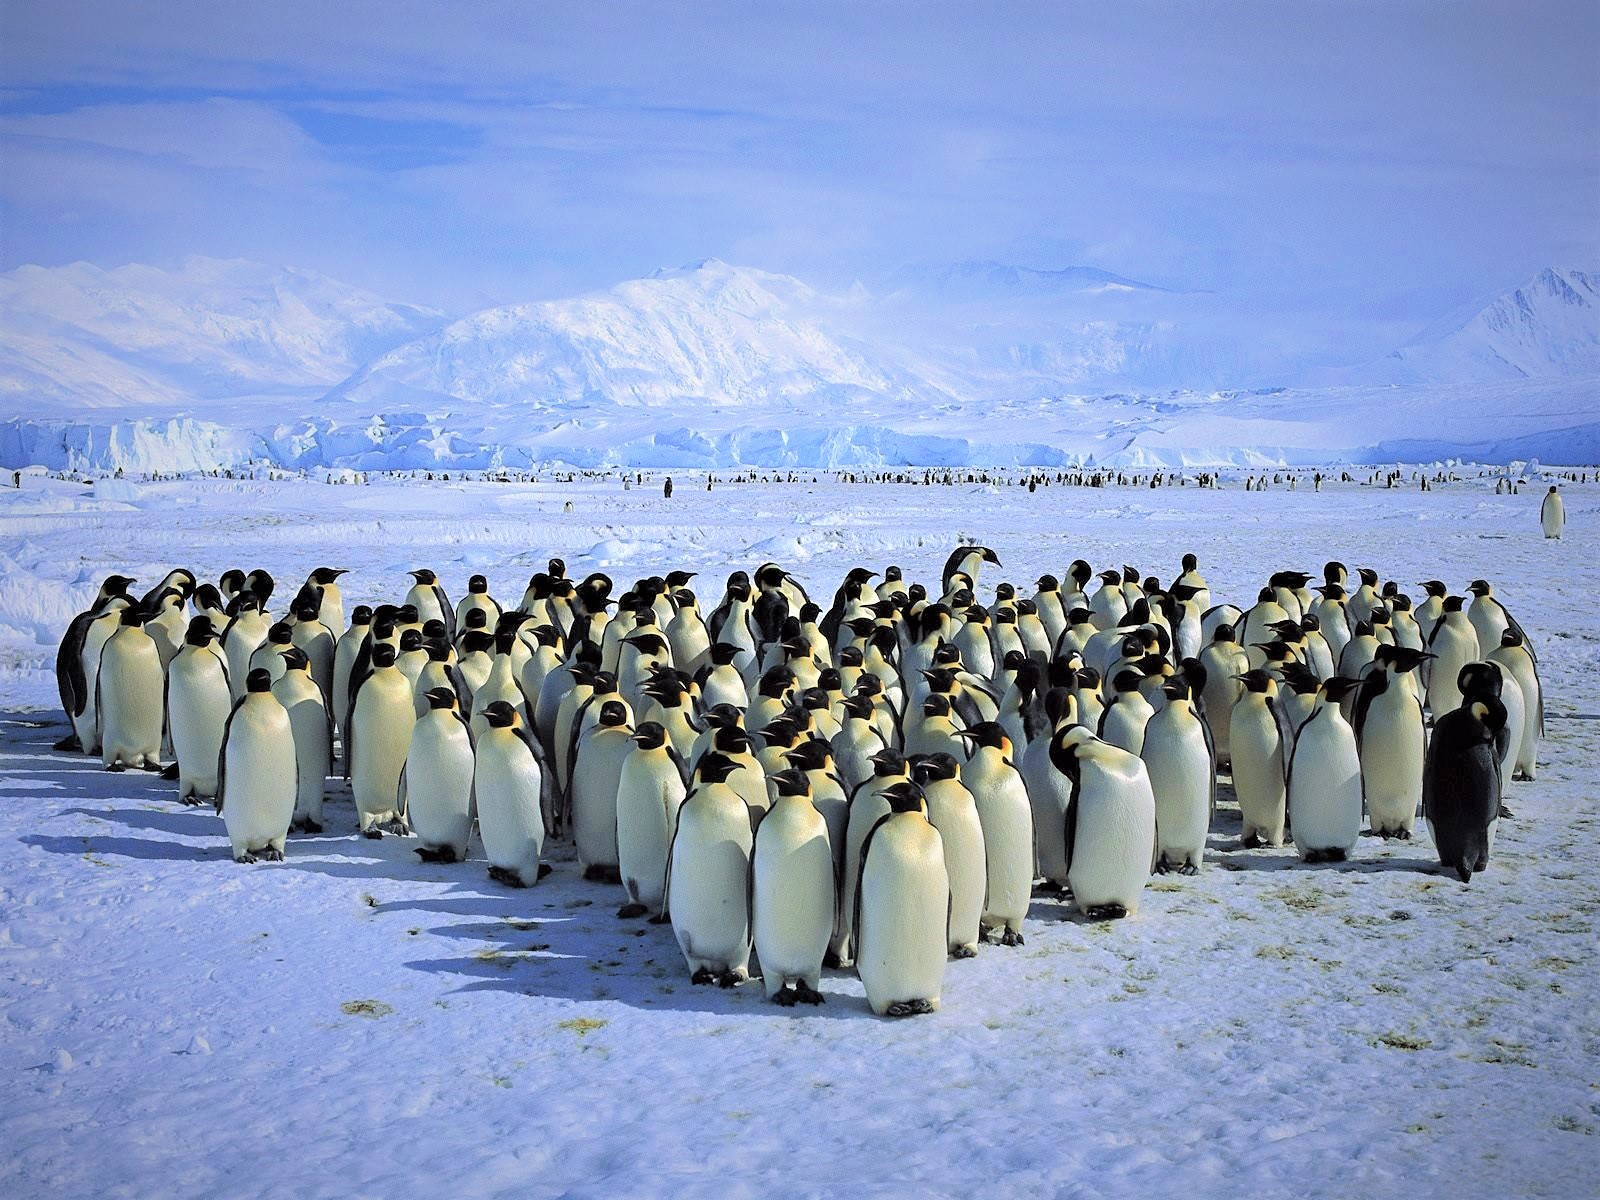 426396 descargar imagen antártida, animales, pingüino, hielo, pingüino real, montaña, nieve, aves: fondos de pantalla y protectores de pantalla gratis